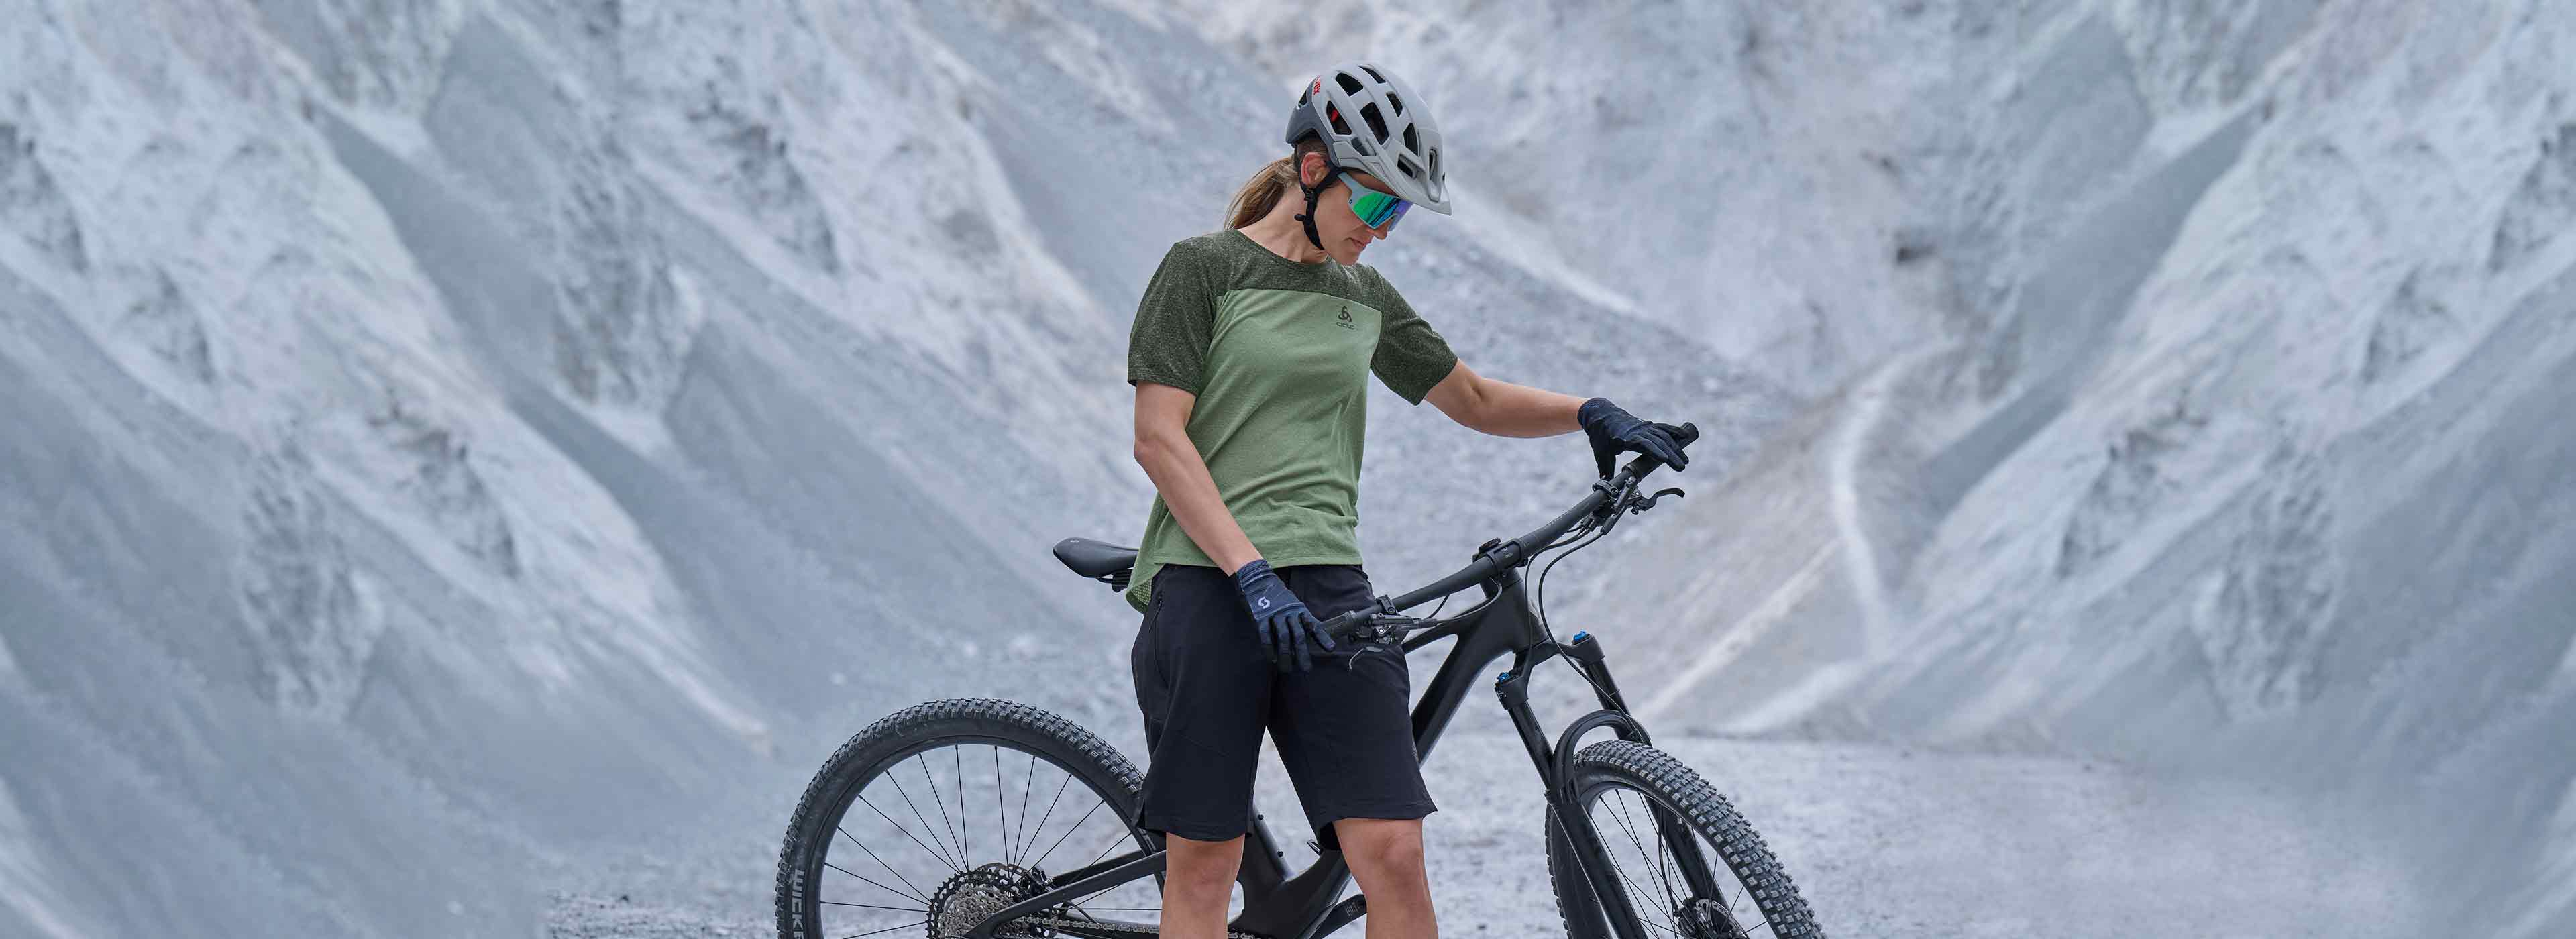 A female mountain biker